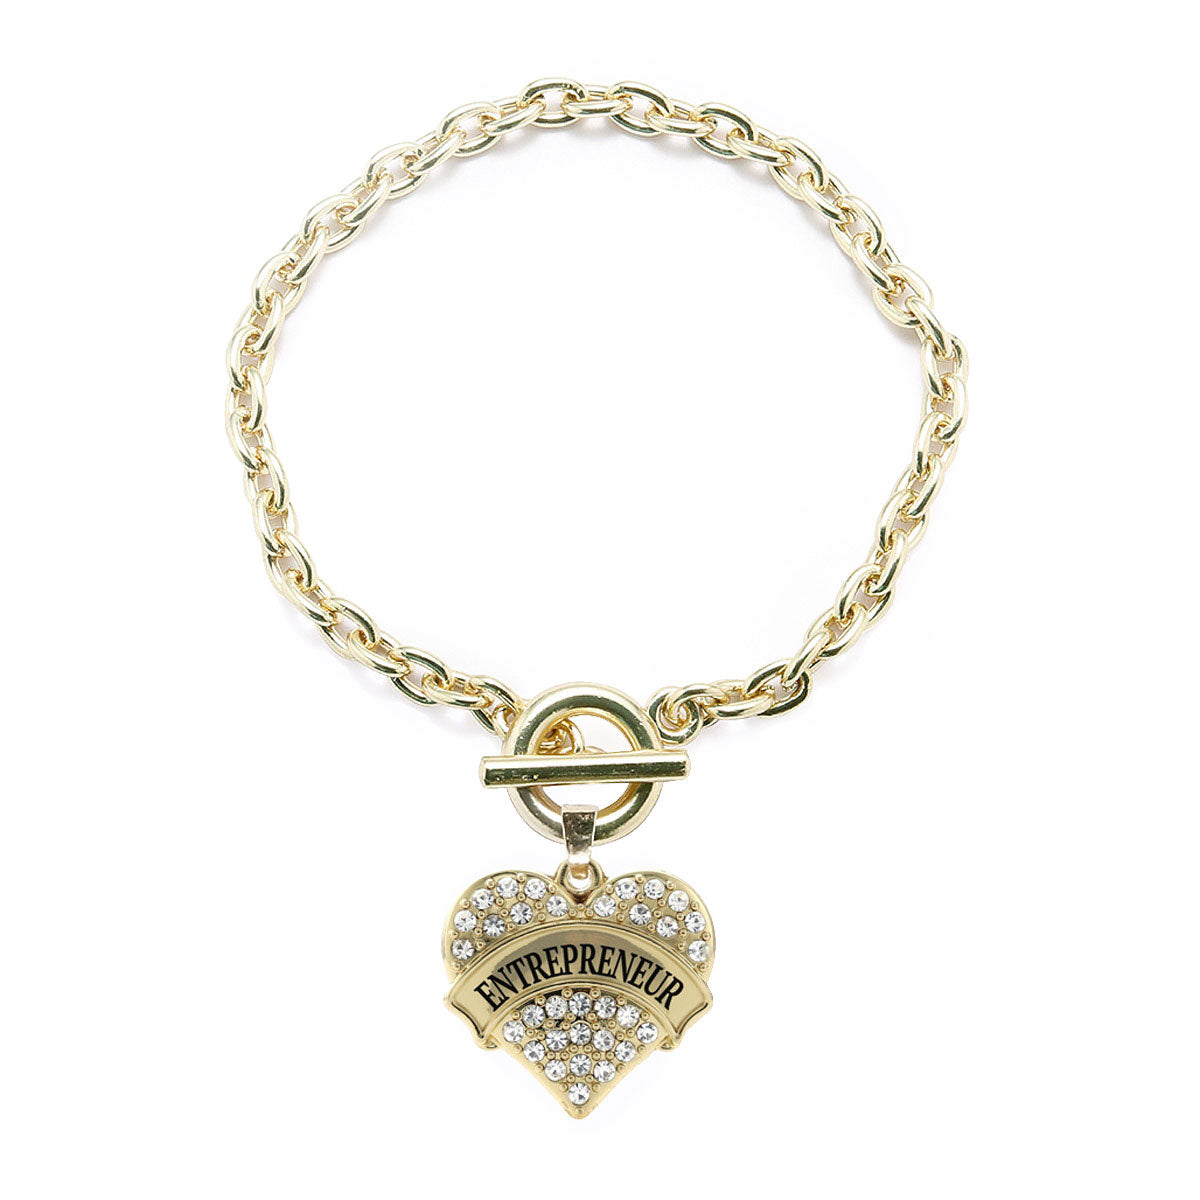 Gold Entrepreneur Pave Heart Charm Toggle Bracelet